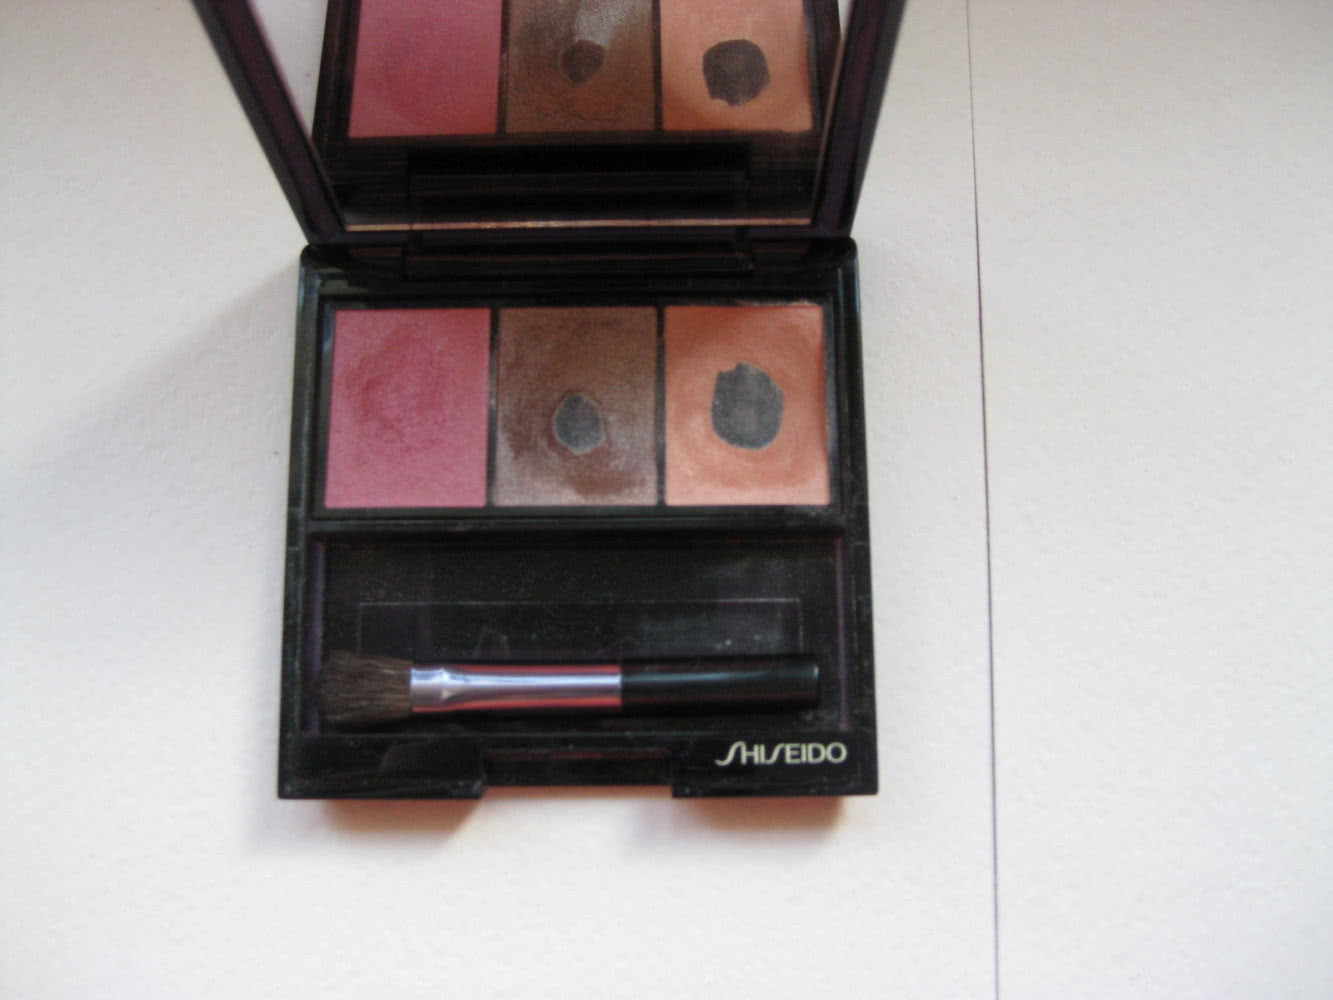 Shiseido Luminizing Satin Eye Color Trio RD 711 Pink Sands